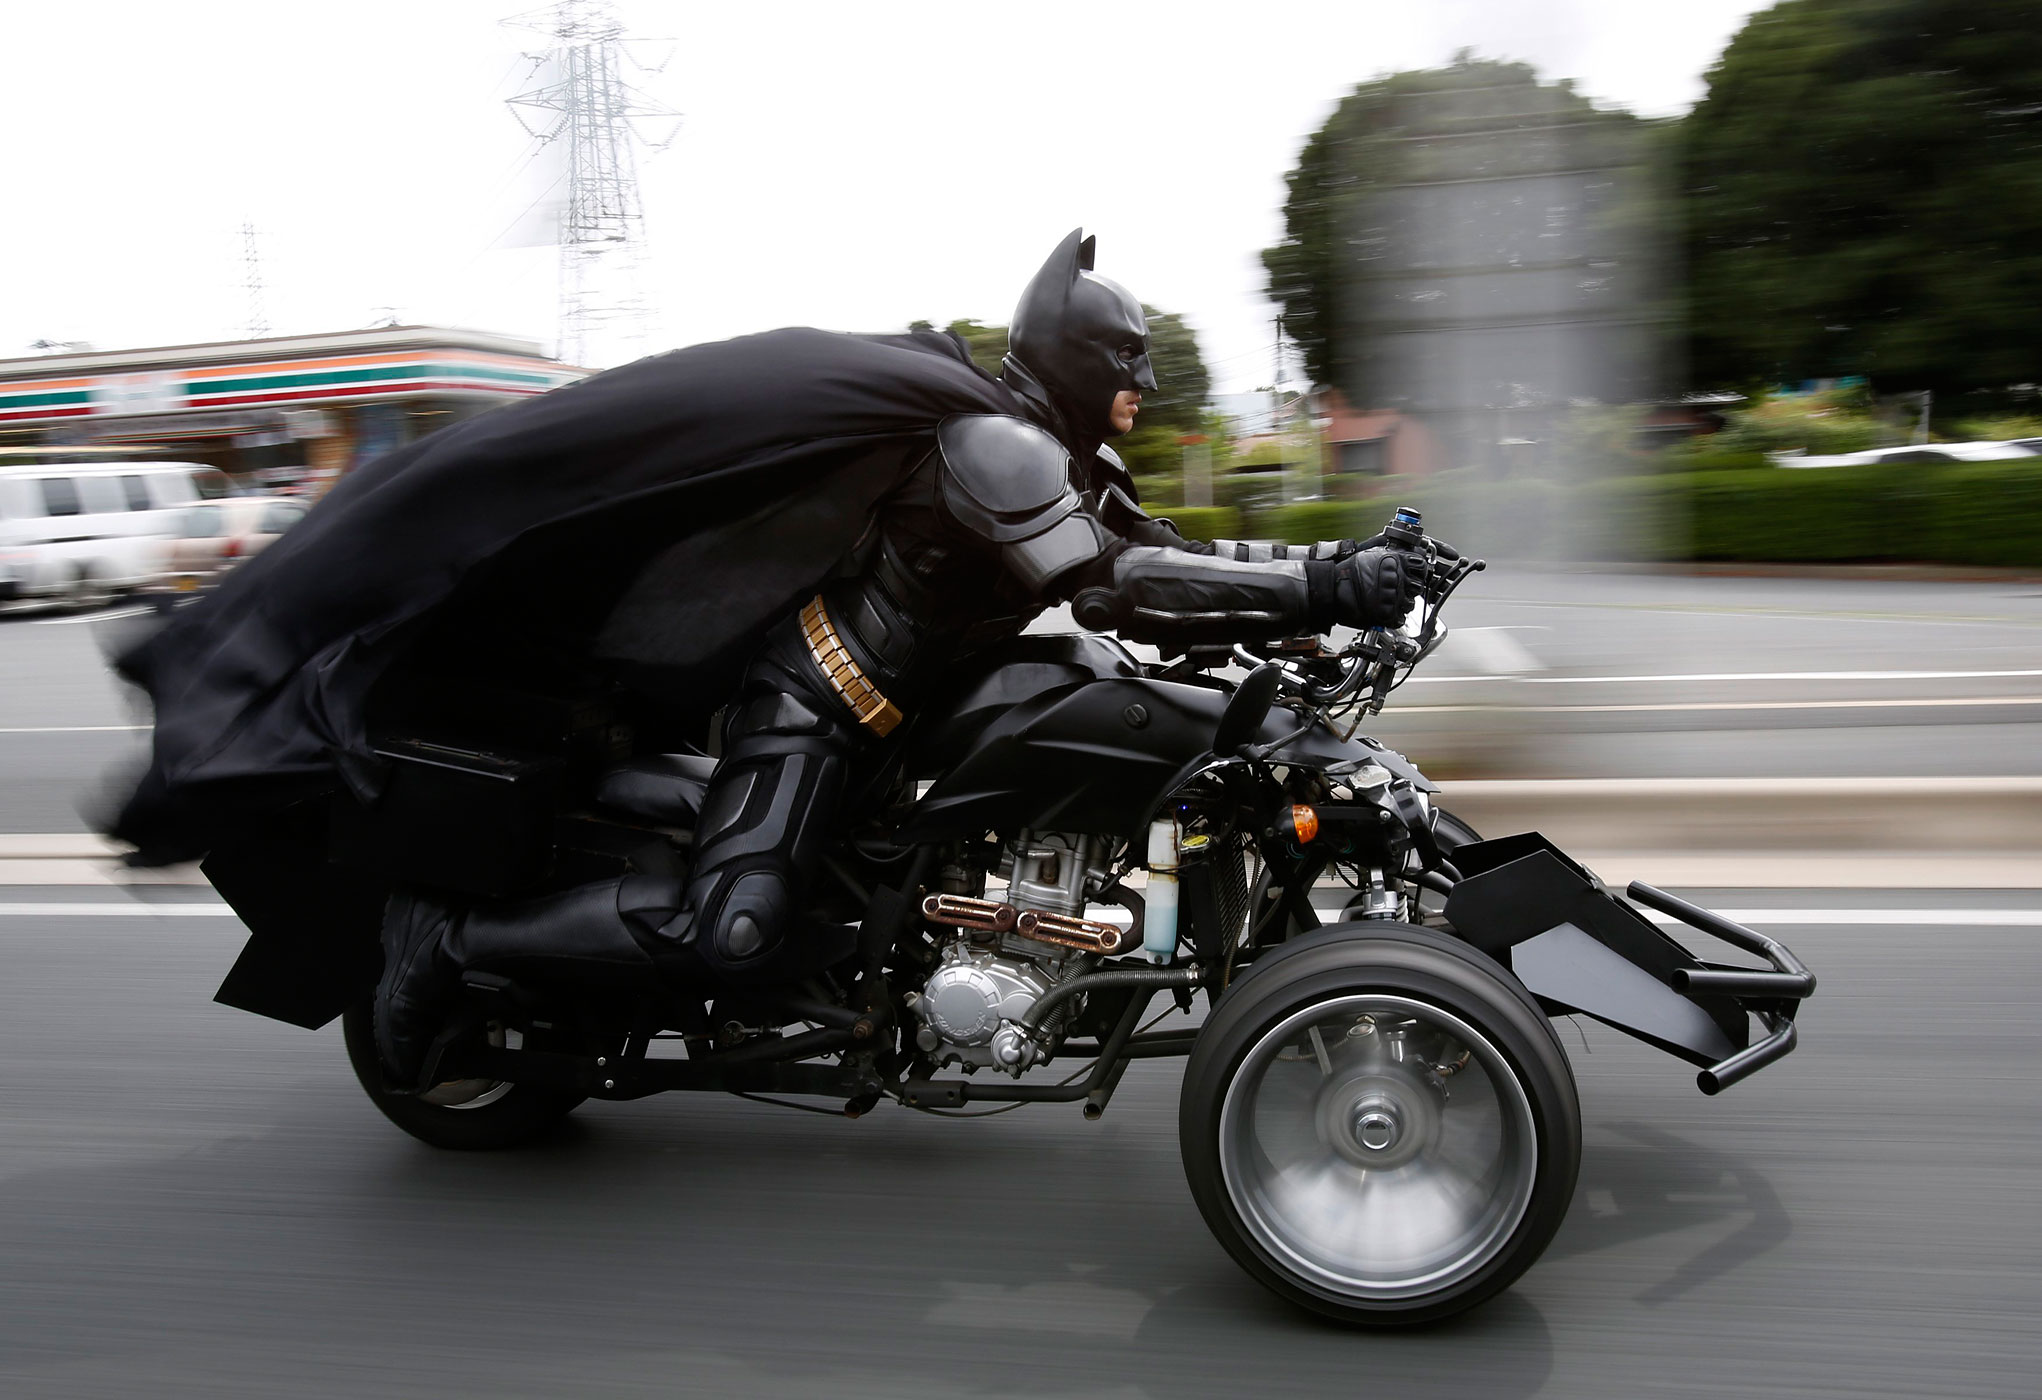 Chibatman rides his  Chibatpod,  a three-wheeled motorcycle.